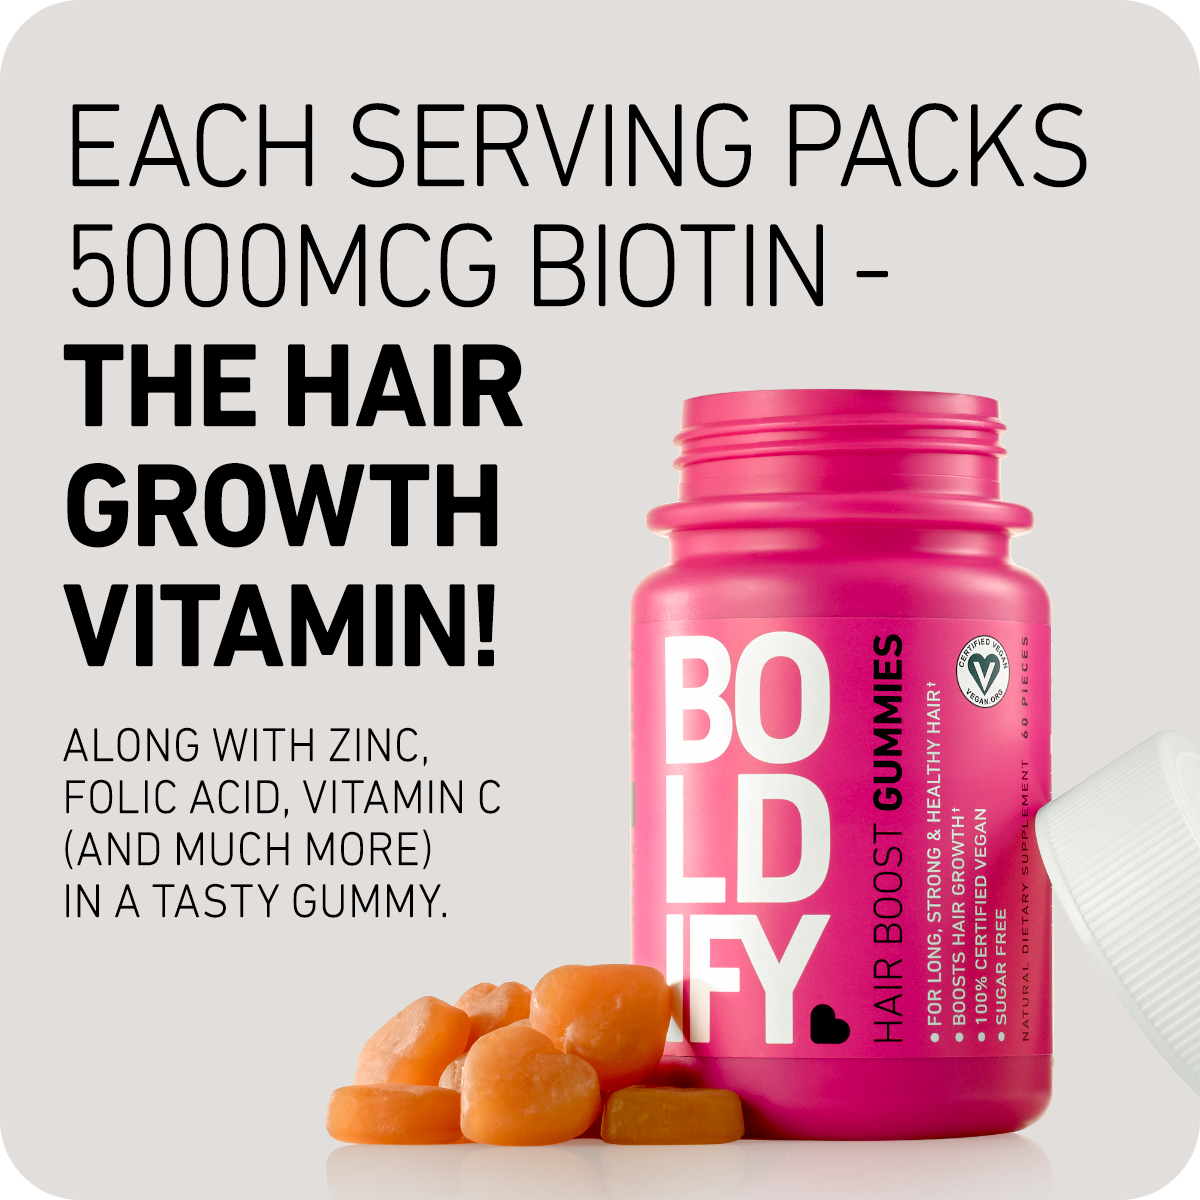 Hair Boost Gummies - Biotin for Healthy Looking Hair Growth by BOLDIFY INC.